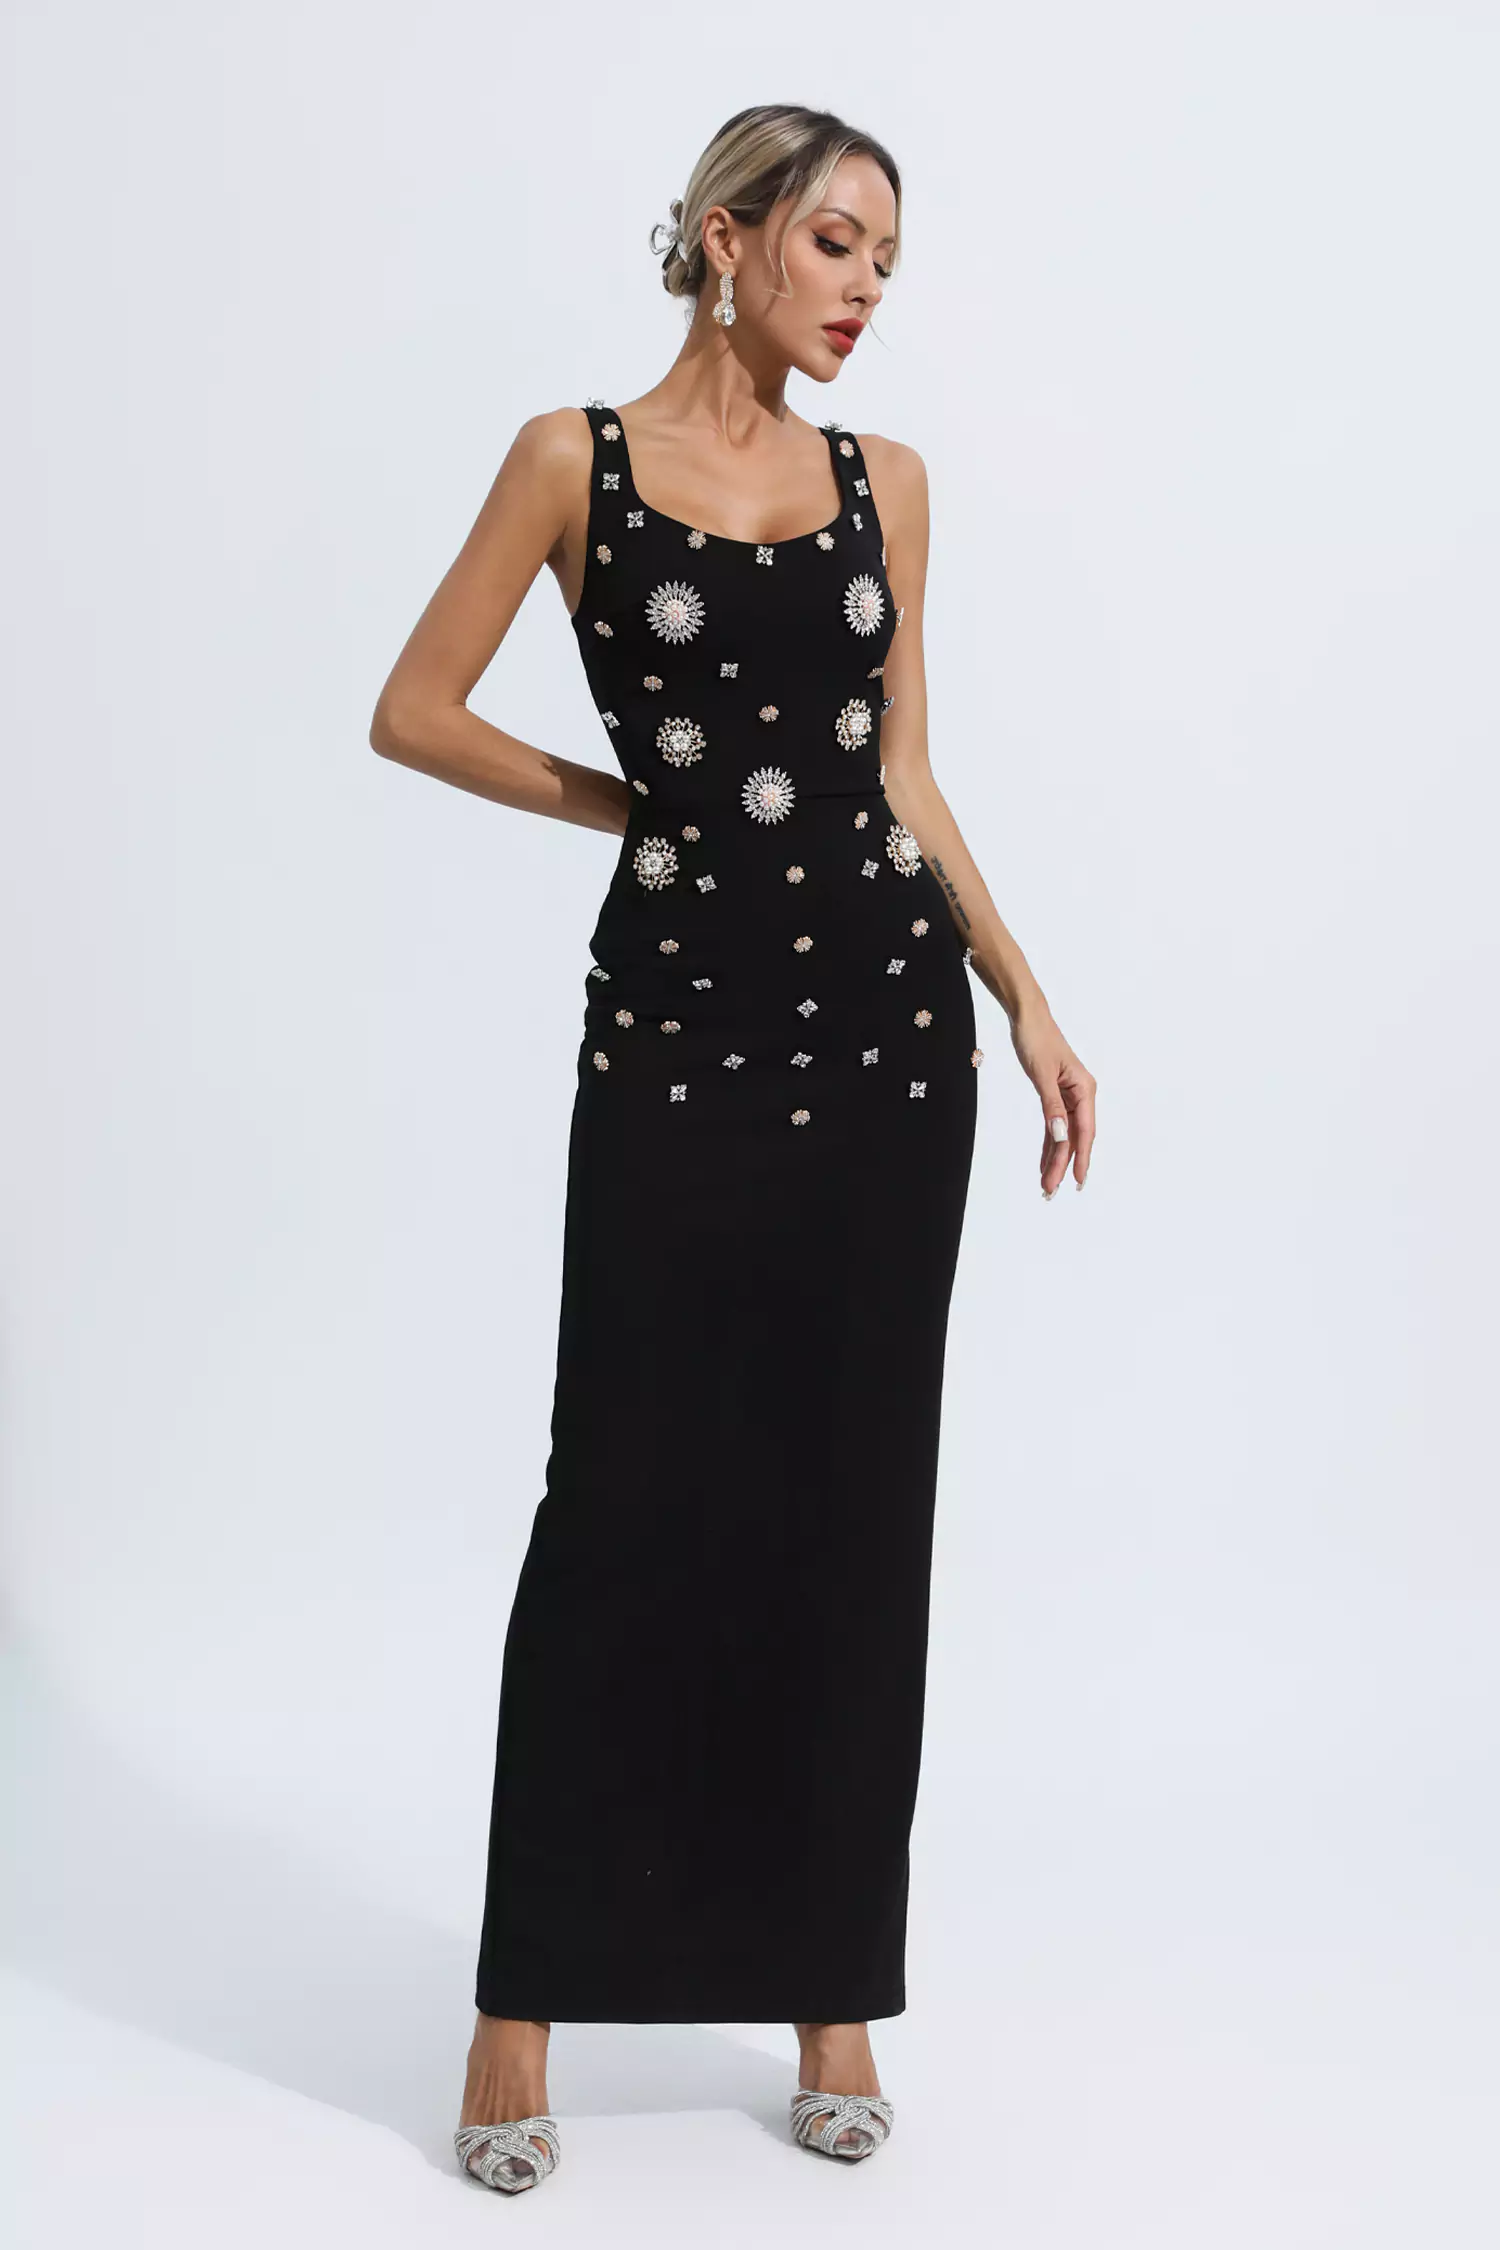 Hadlee Black Embellished Diamond Maxi Dress